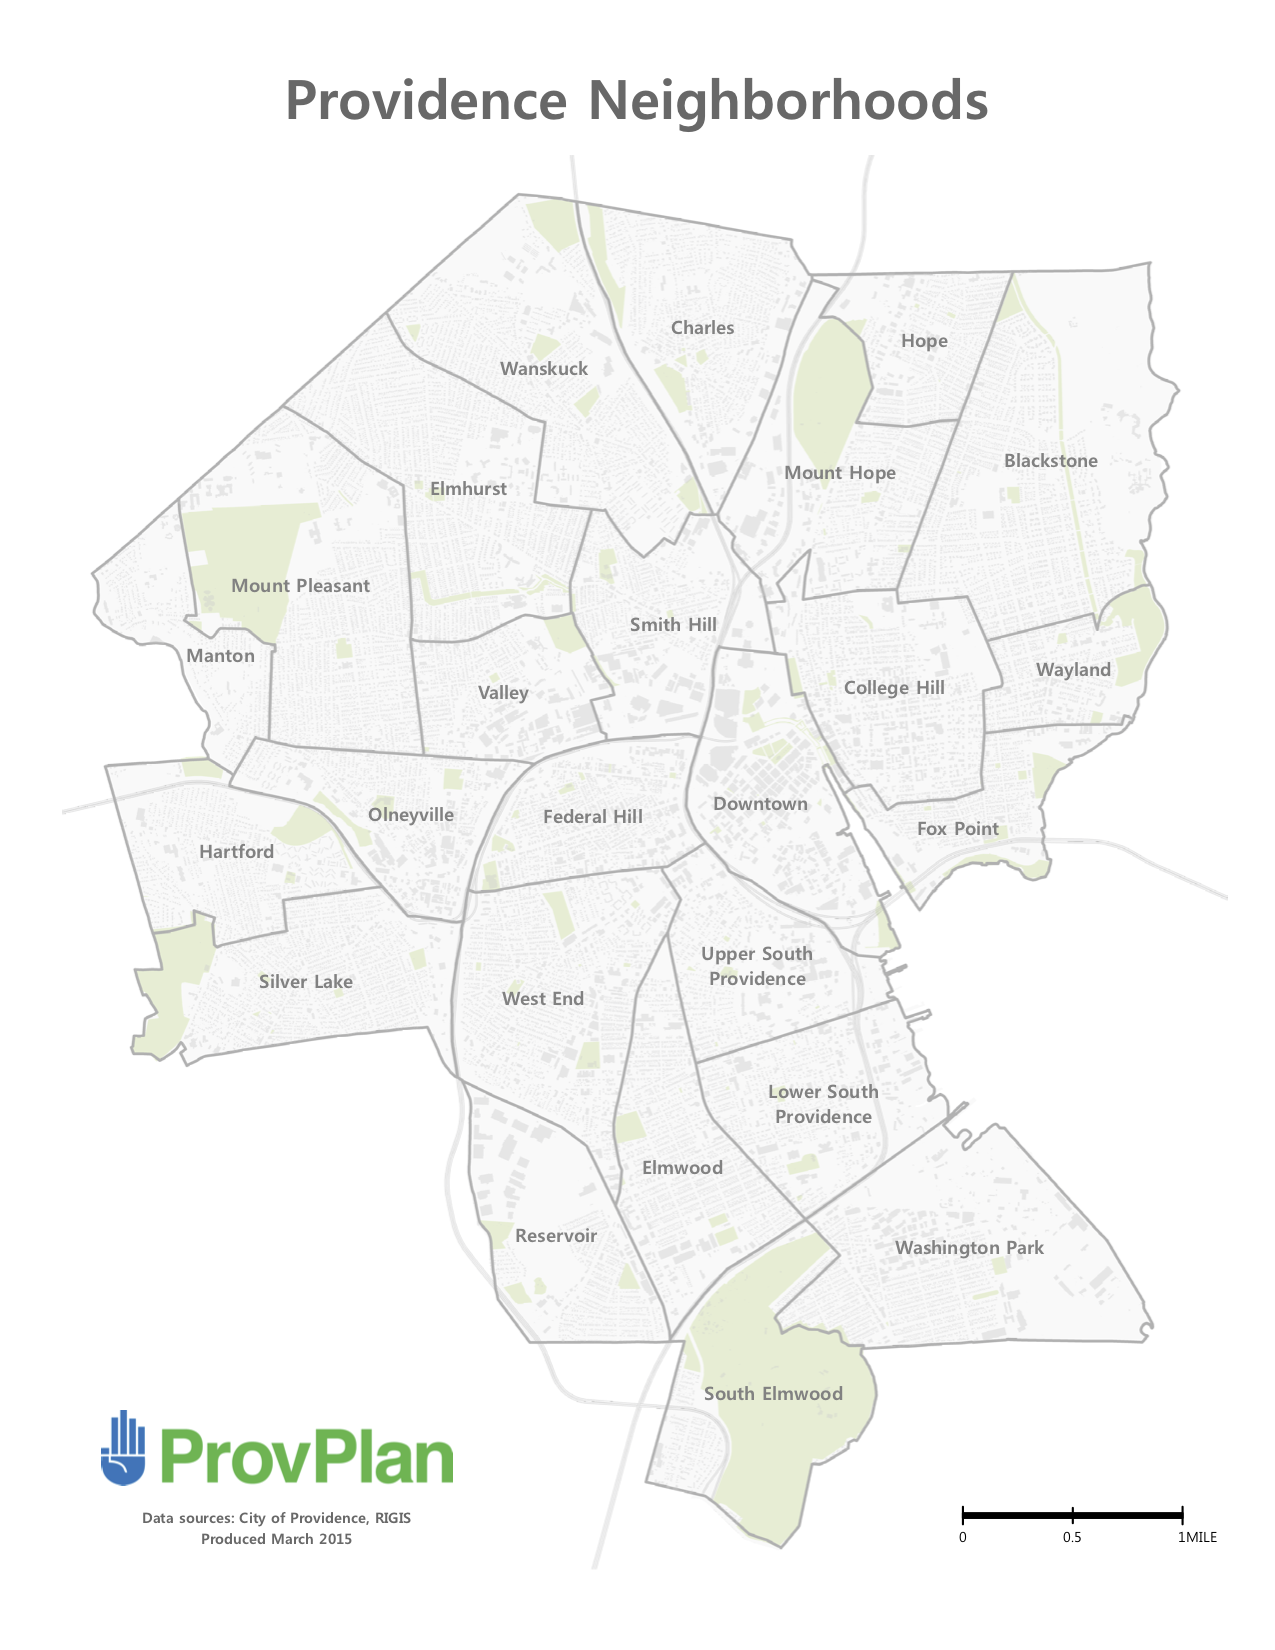 Map of Providence neighborhoods